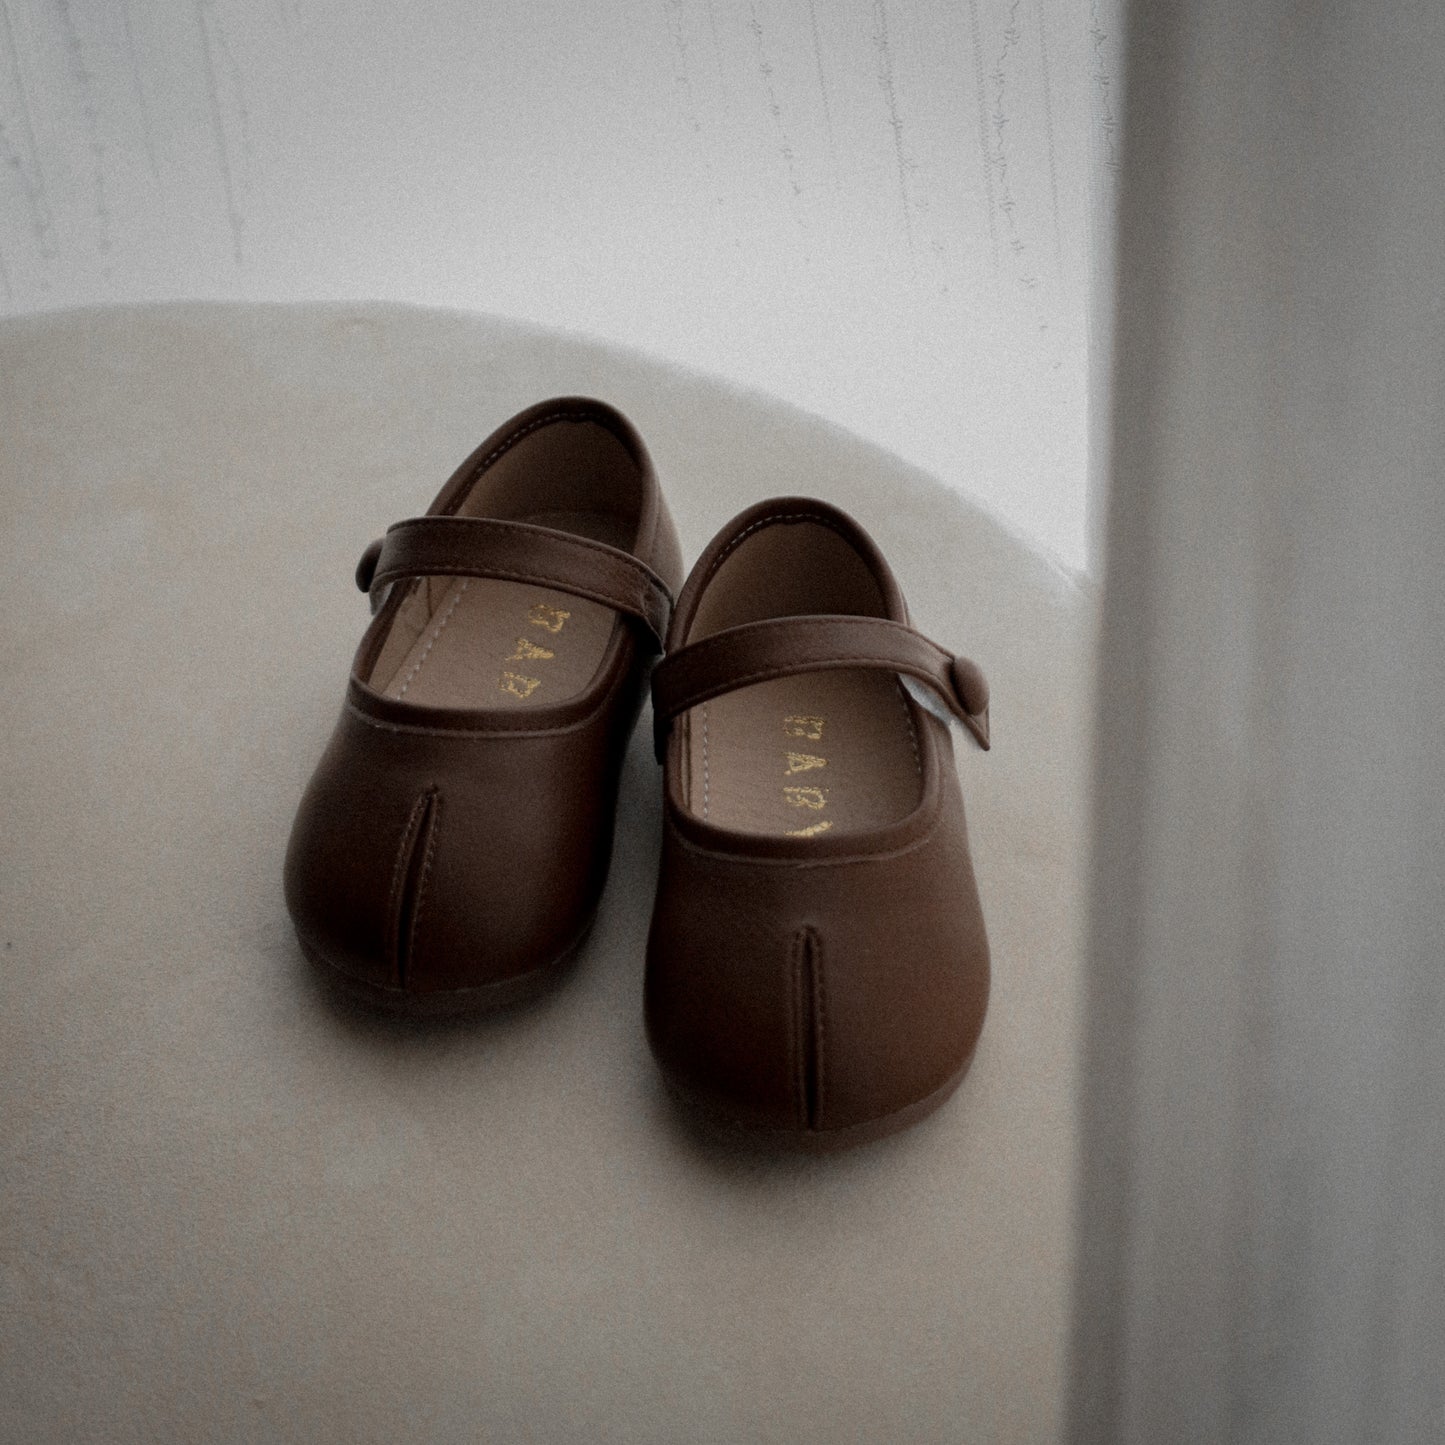 split-toed shoes / brown